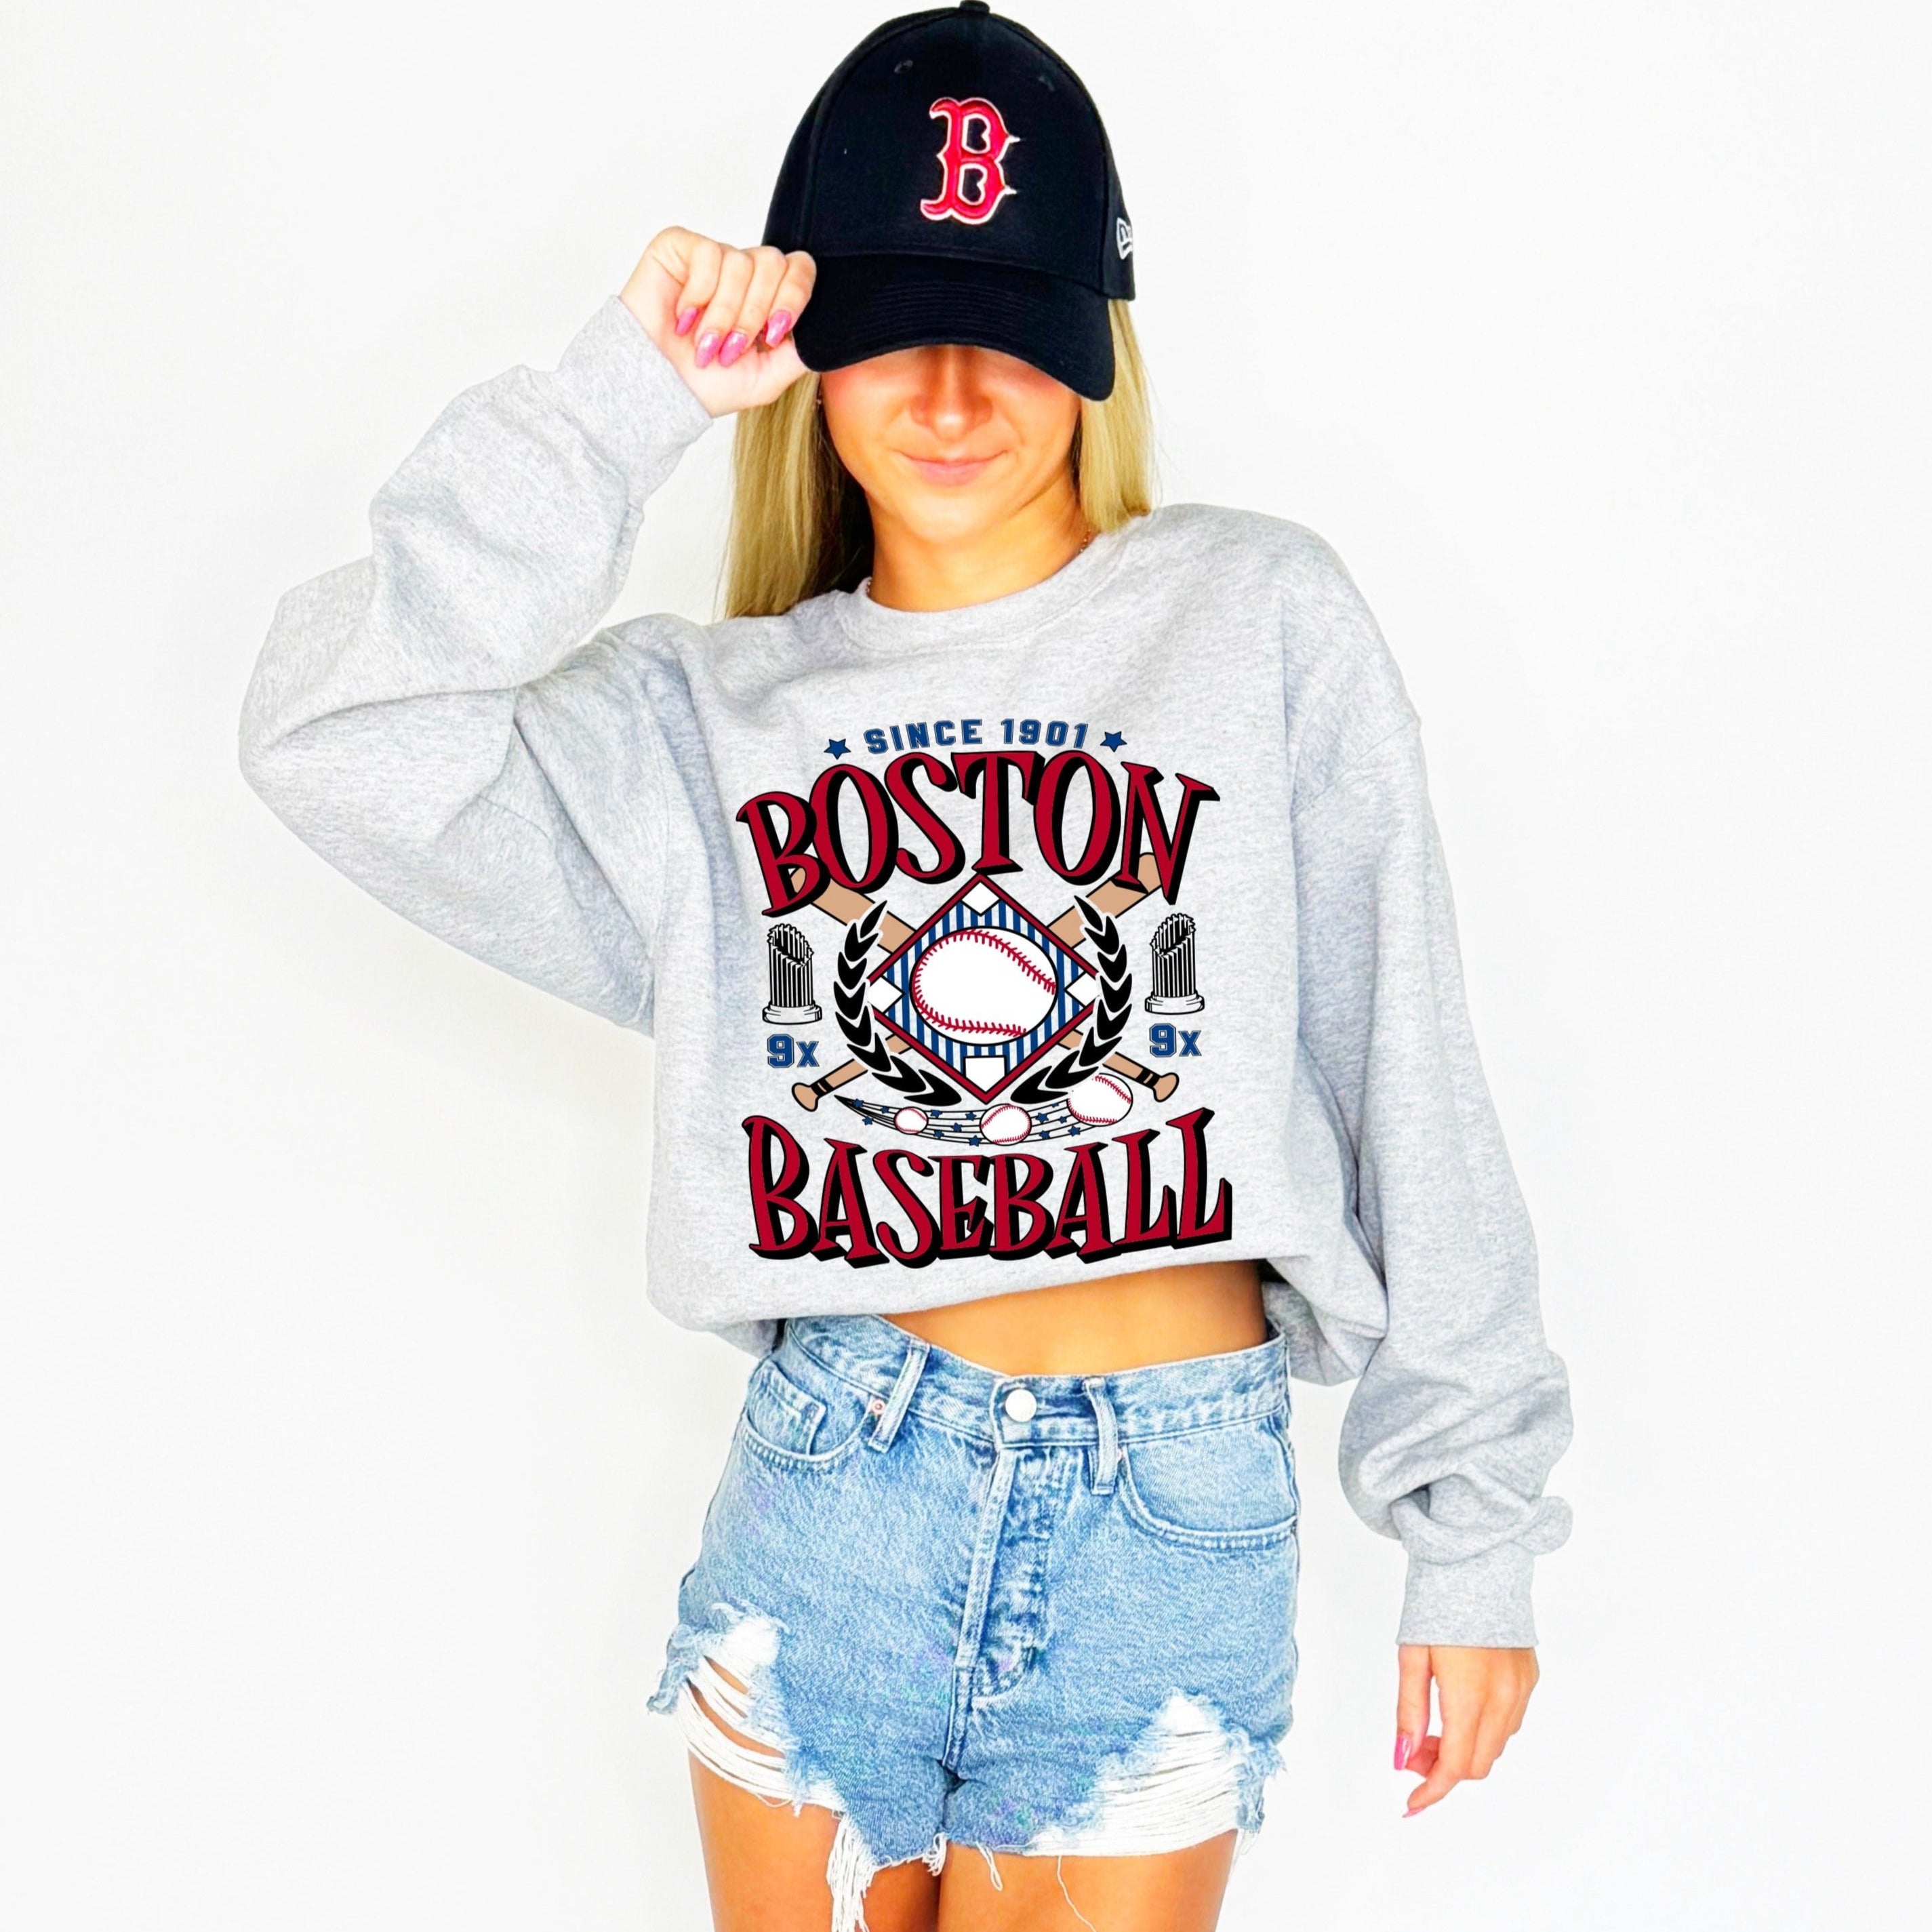 Boston Baseball Team Youth & Adult Sweatshirt